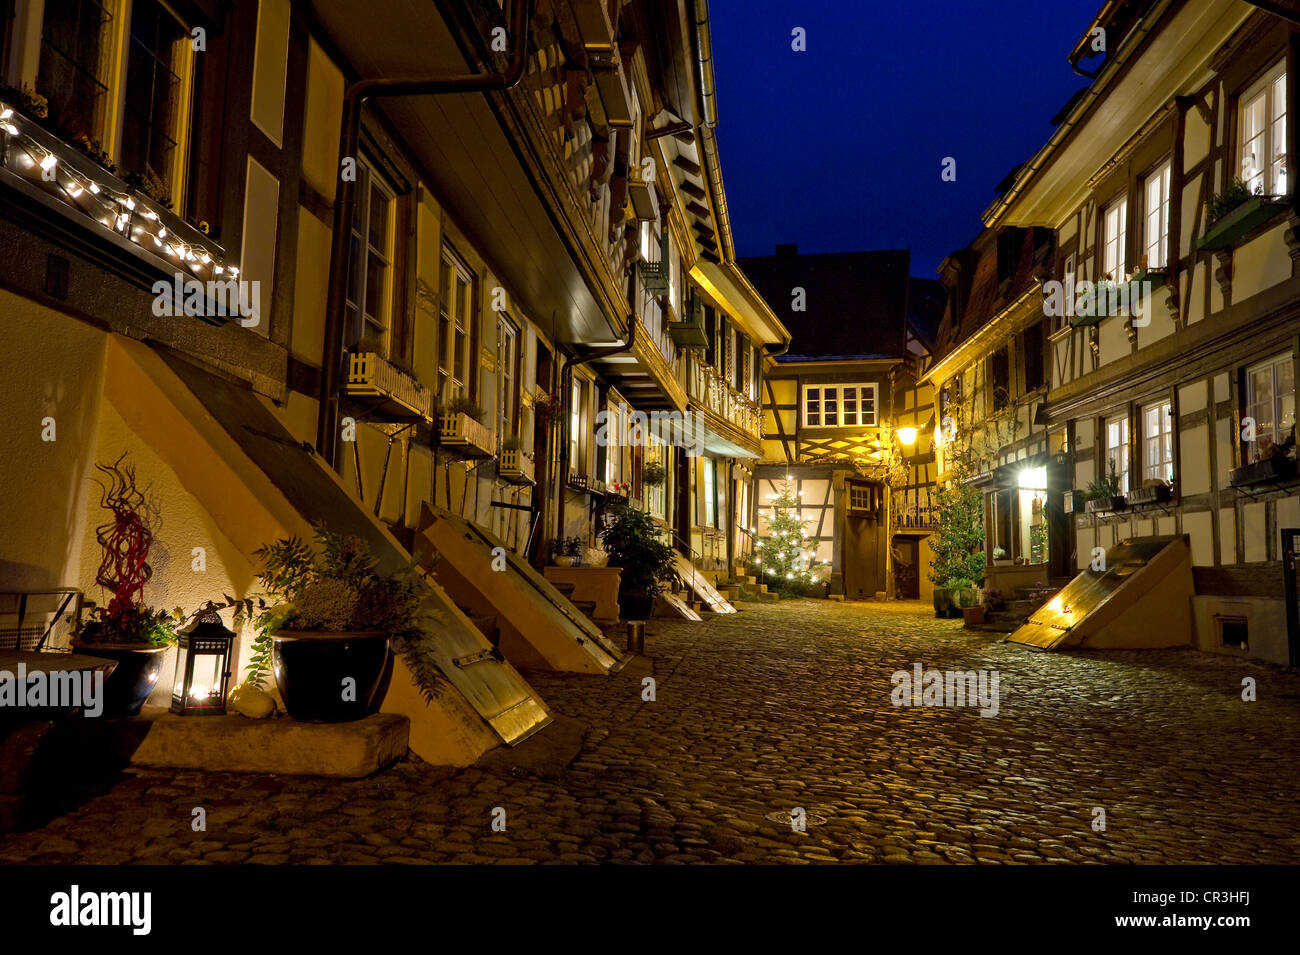 Maisons à colombages, ses rues pavées de nuit, Gengenbach, Forêt Noire, Bade-Wurtemberg, Allemagne, Europe Banque D'Images